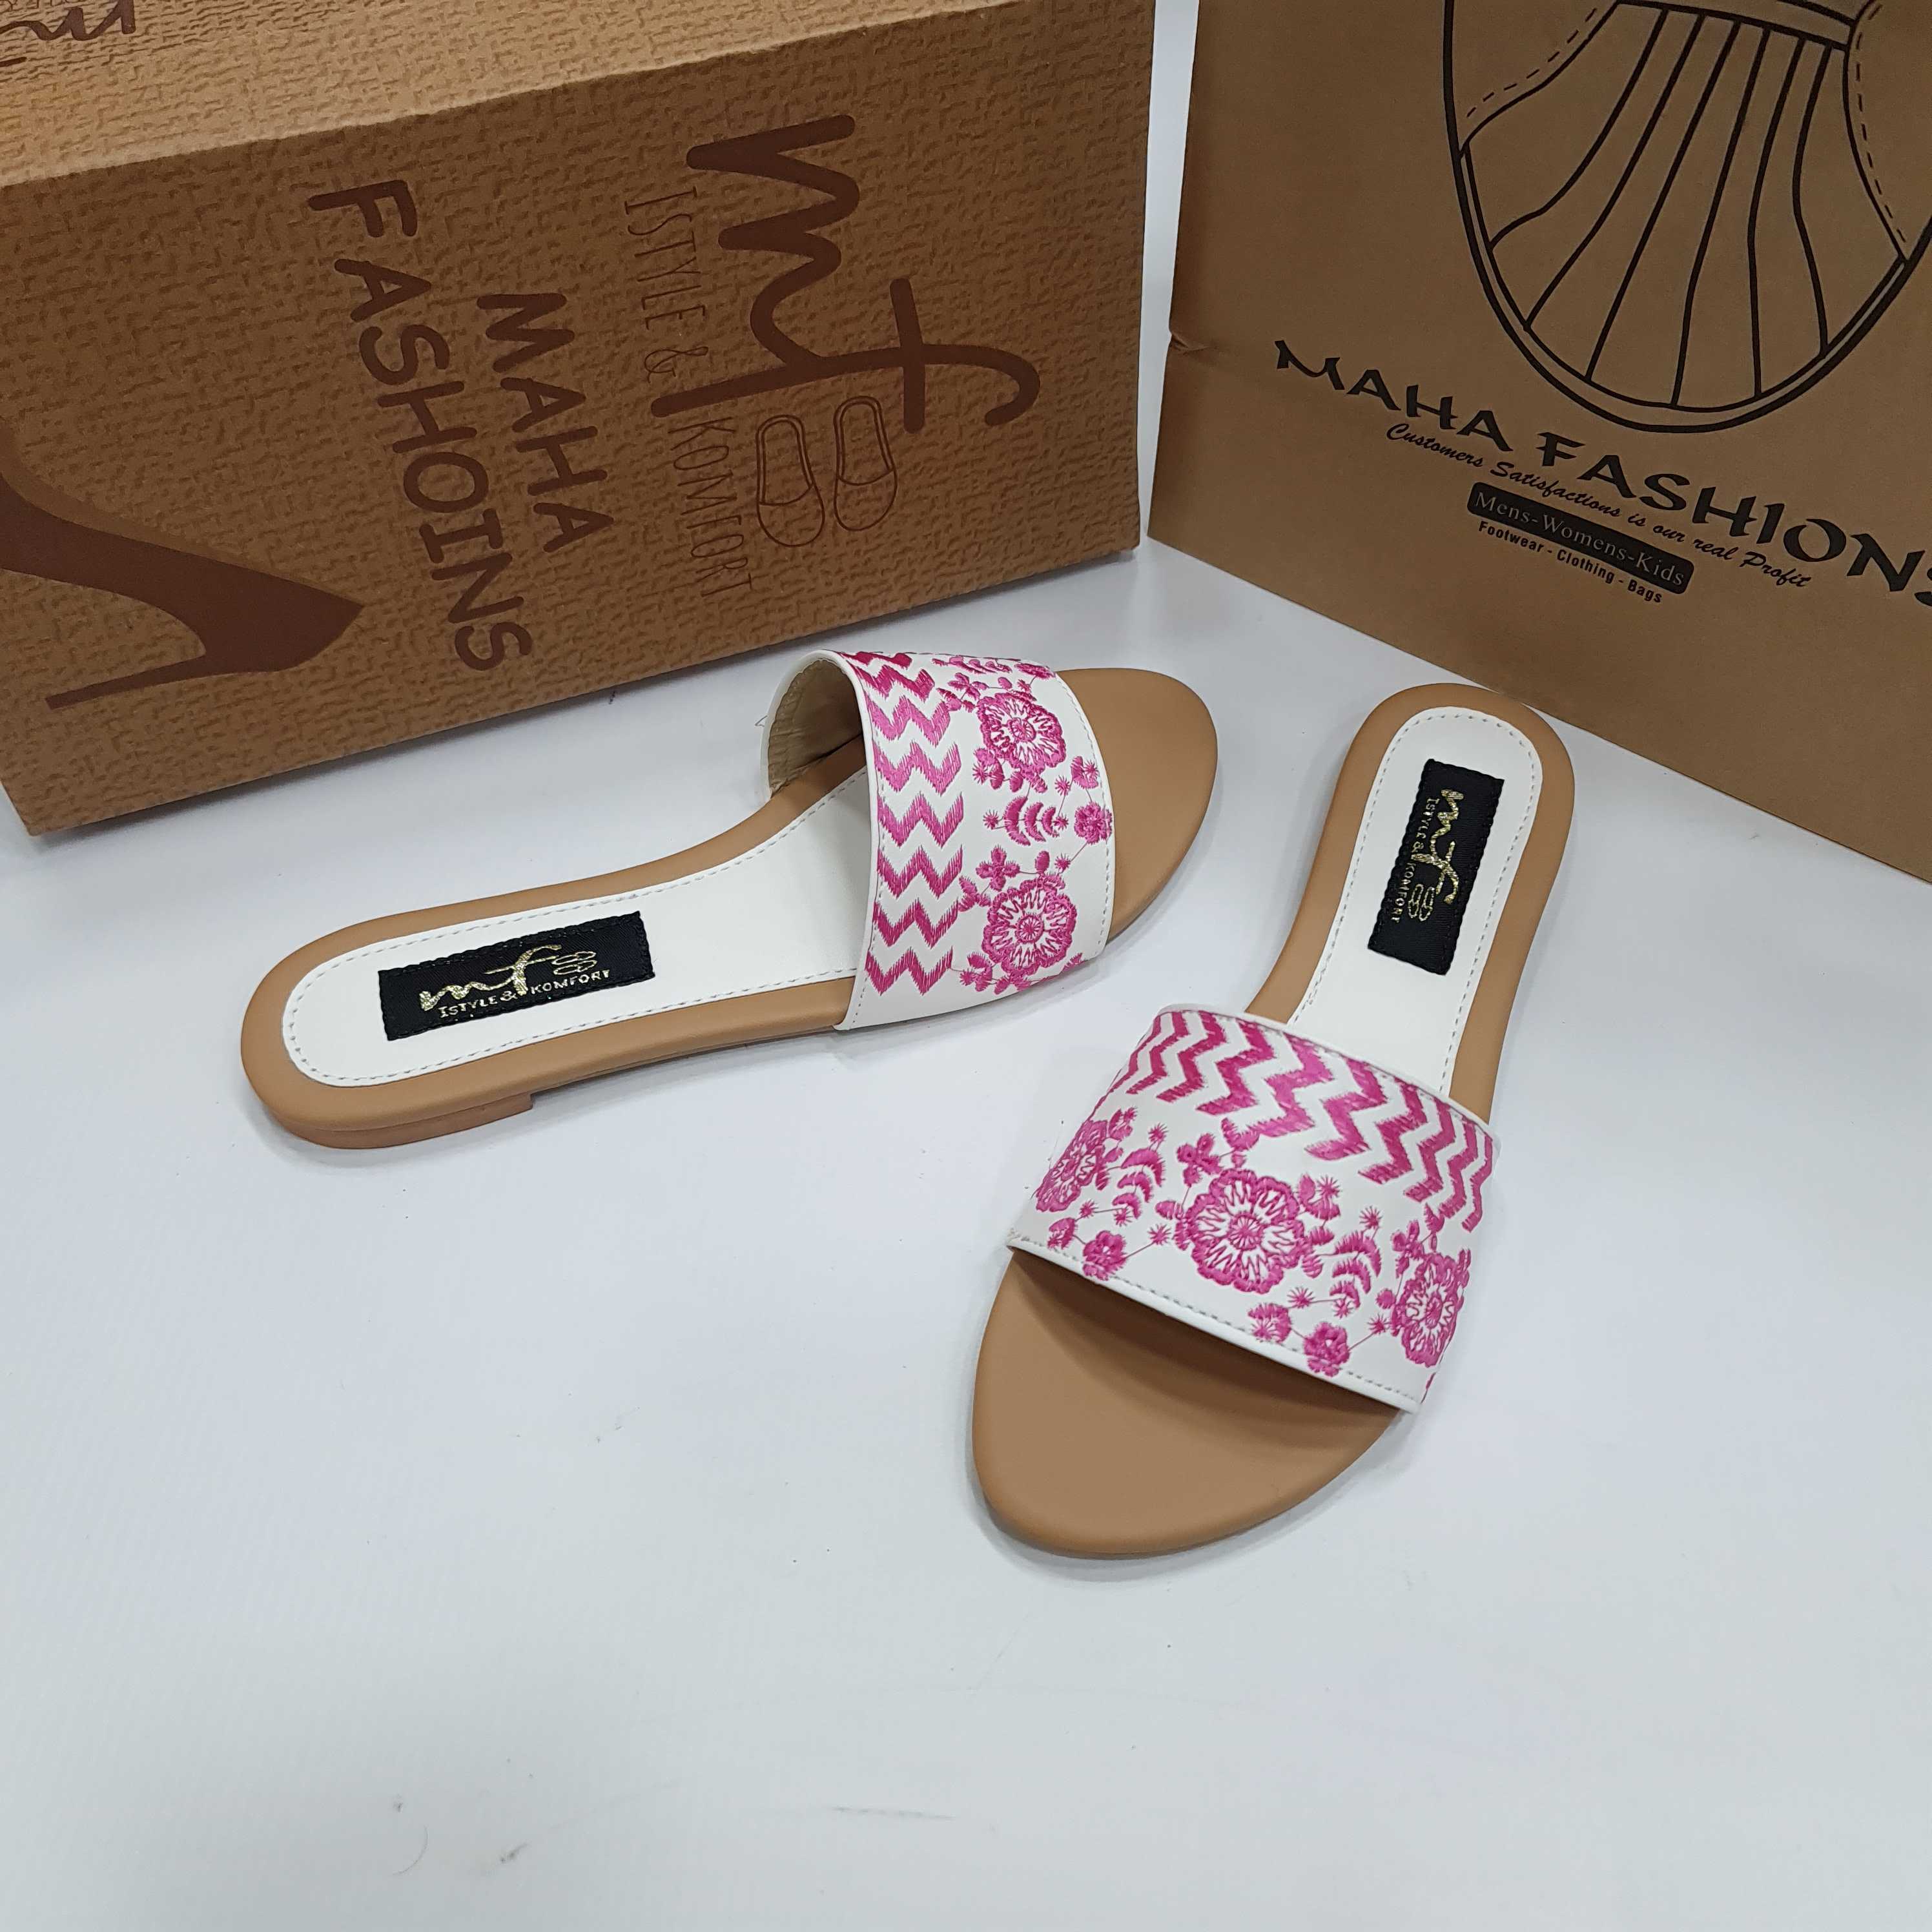 Embriodery Flats - Maha fashions -  Slippers